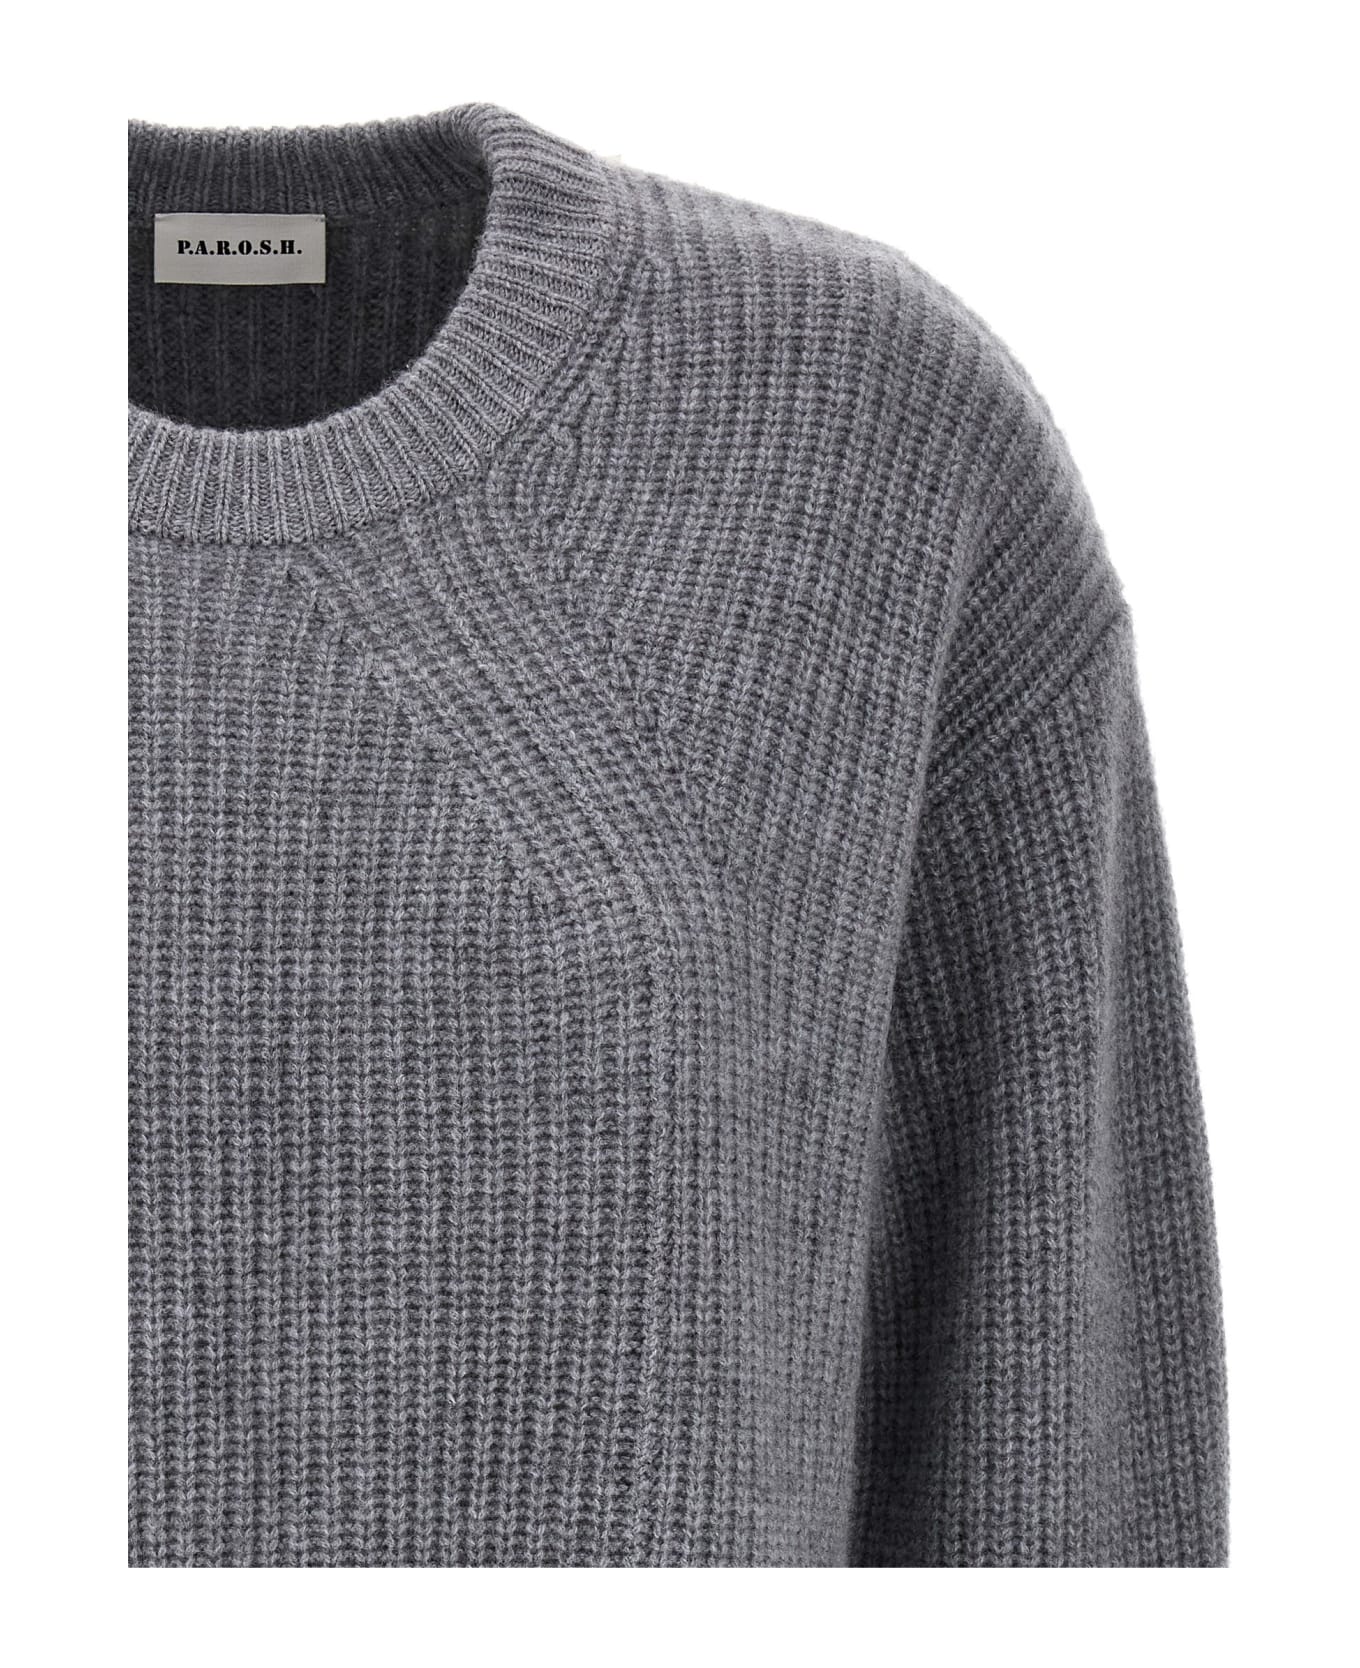 Parosh Cashmere Sweater - Gray